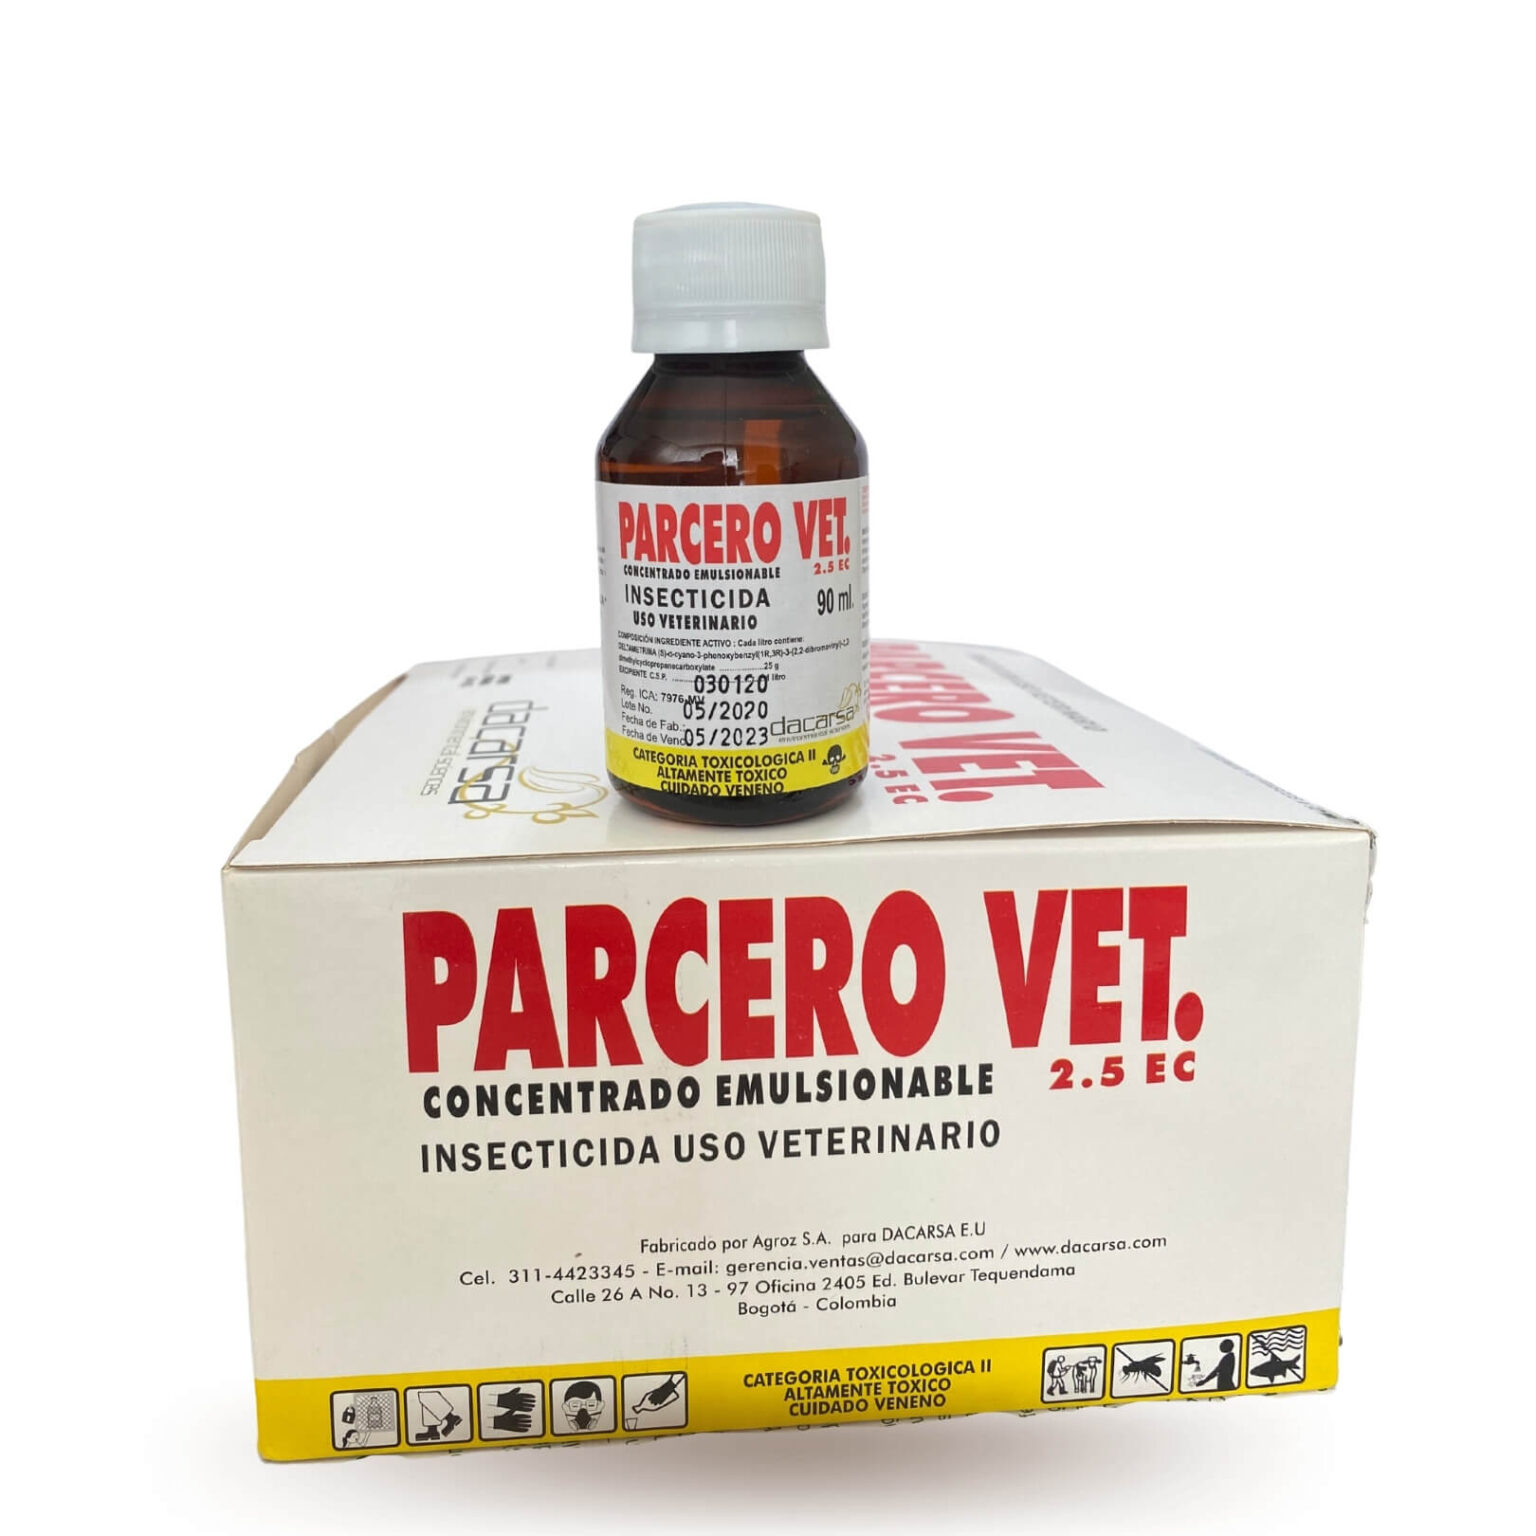 parcero vet insecticida veterinario 1 1536x1536 1